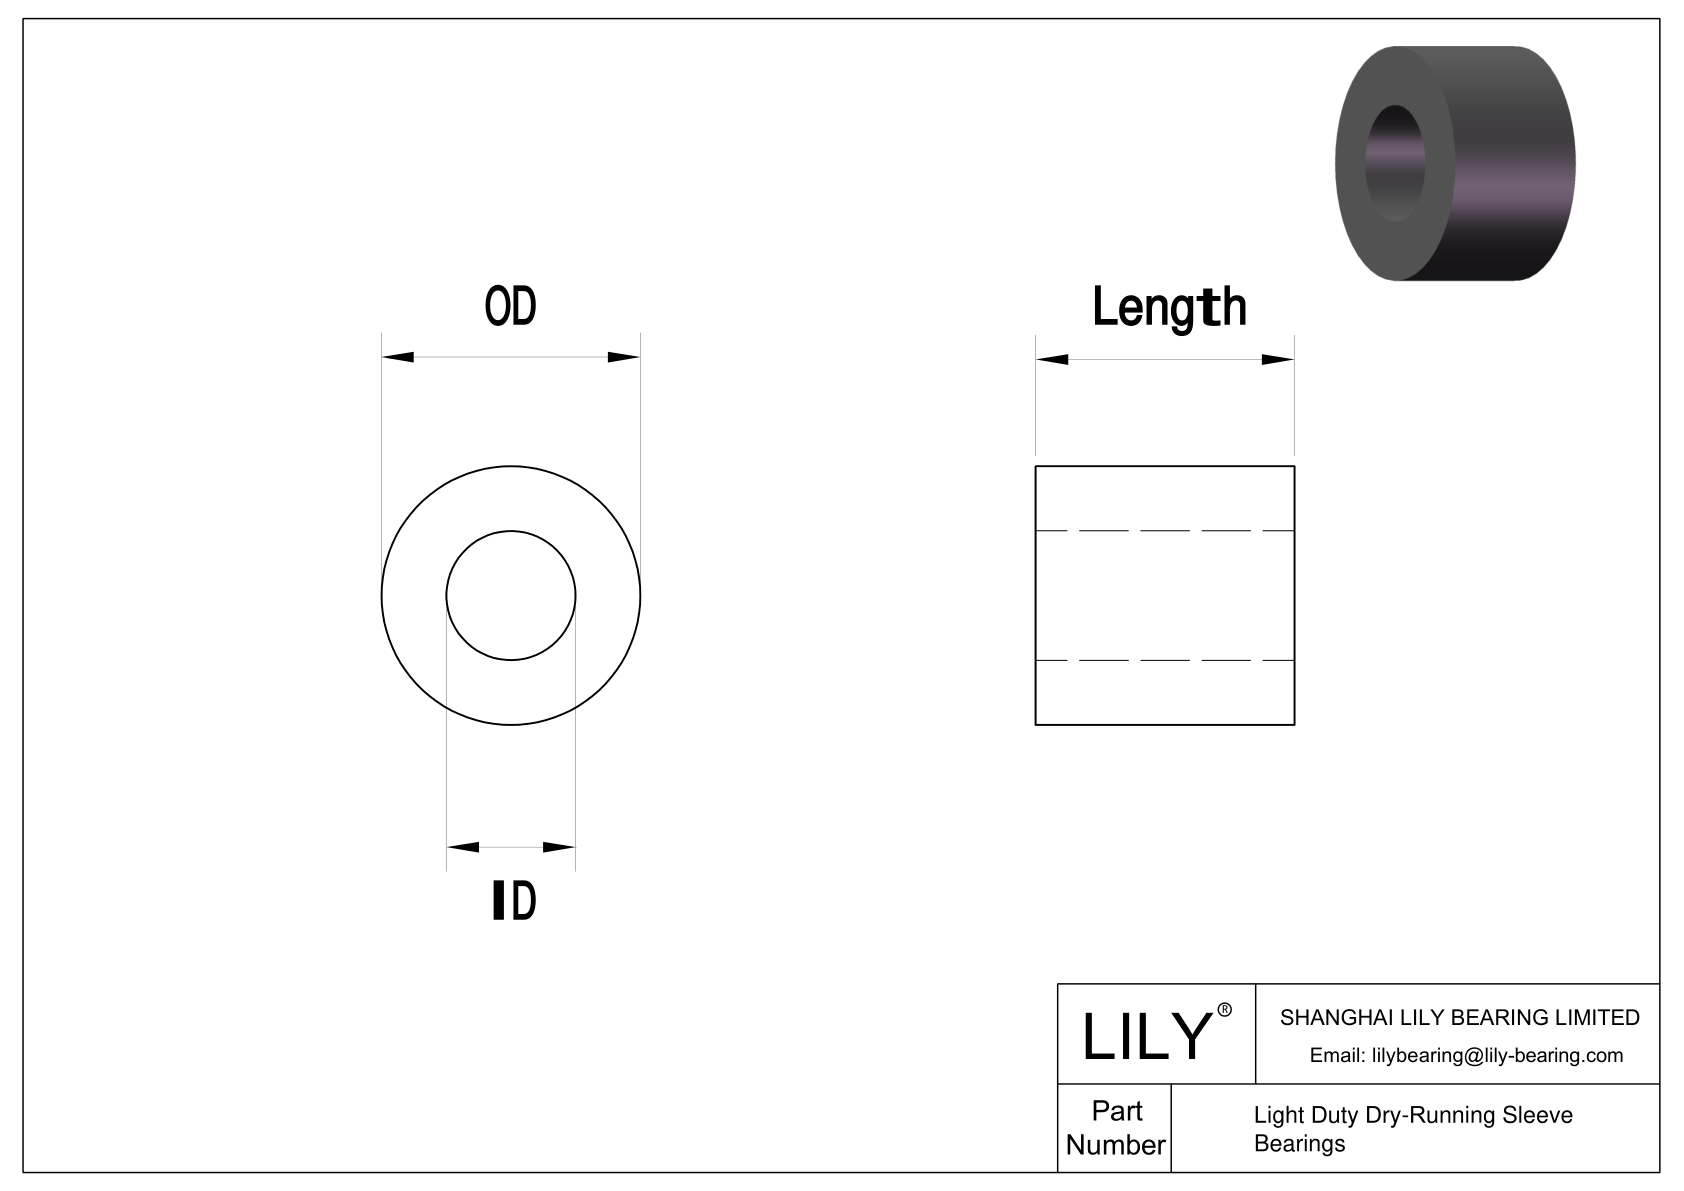 6389K949 Light Duty Dry-Running Sleeve Bearings cad drawing